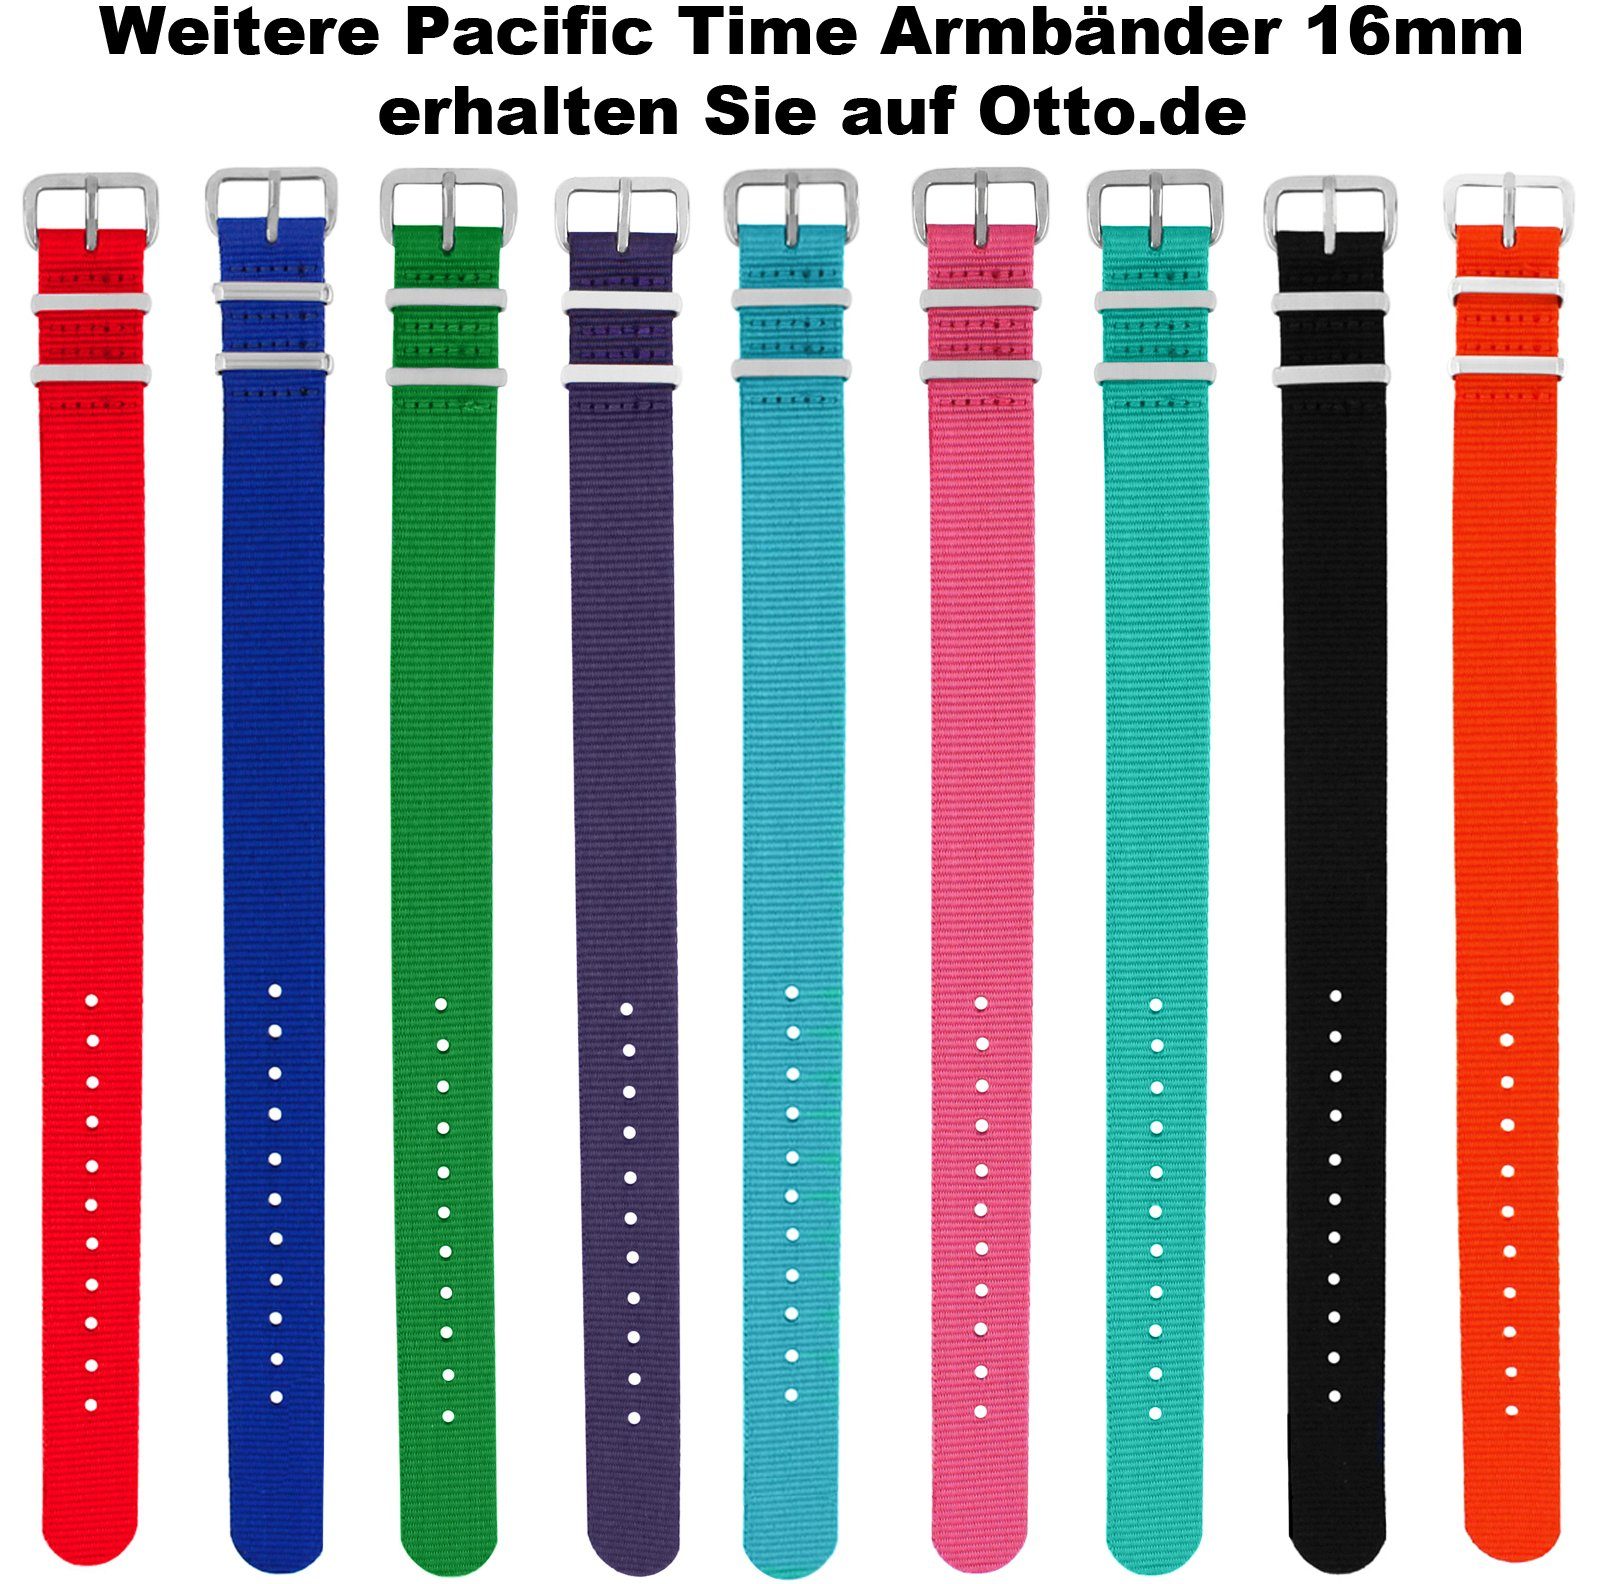 Textil Time Pacific Wechselarmband Gratis 16mm, blau Nylon Uhrenarmband Versand